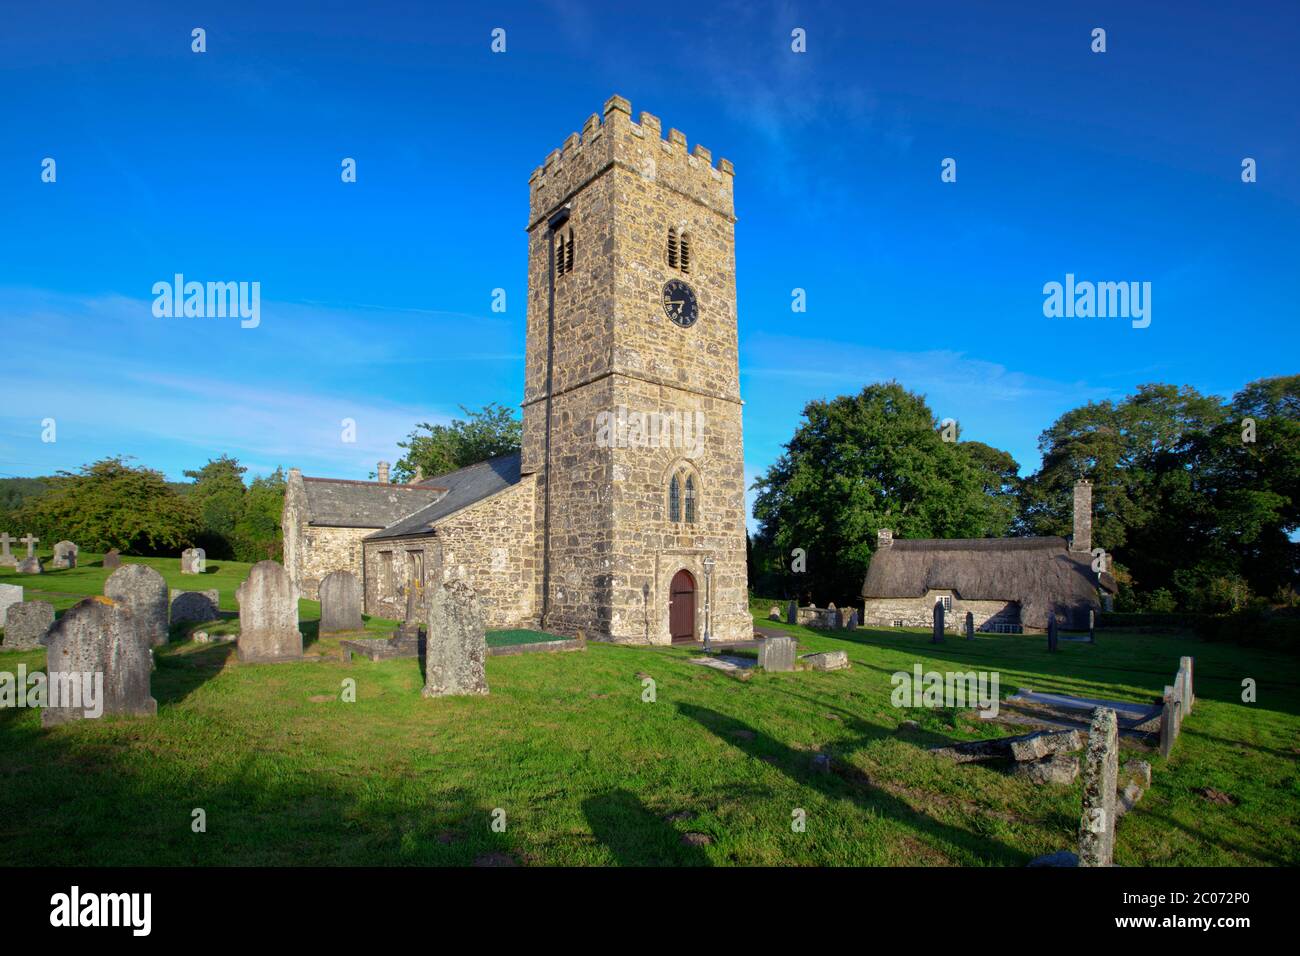 Buckland dans l'église de Moor, Buckland dans le Moor, parc national de Dartmoor, Devon, Angleterre, Royaume-Uni Banque D'Images